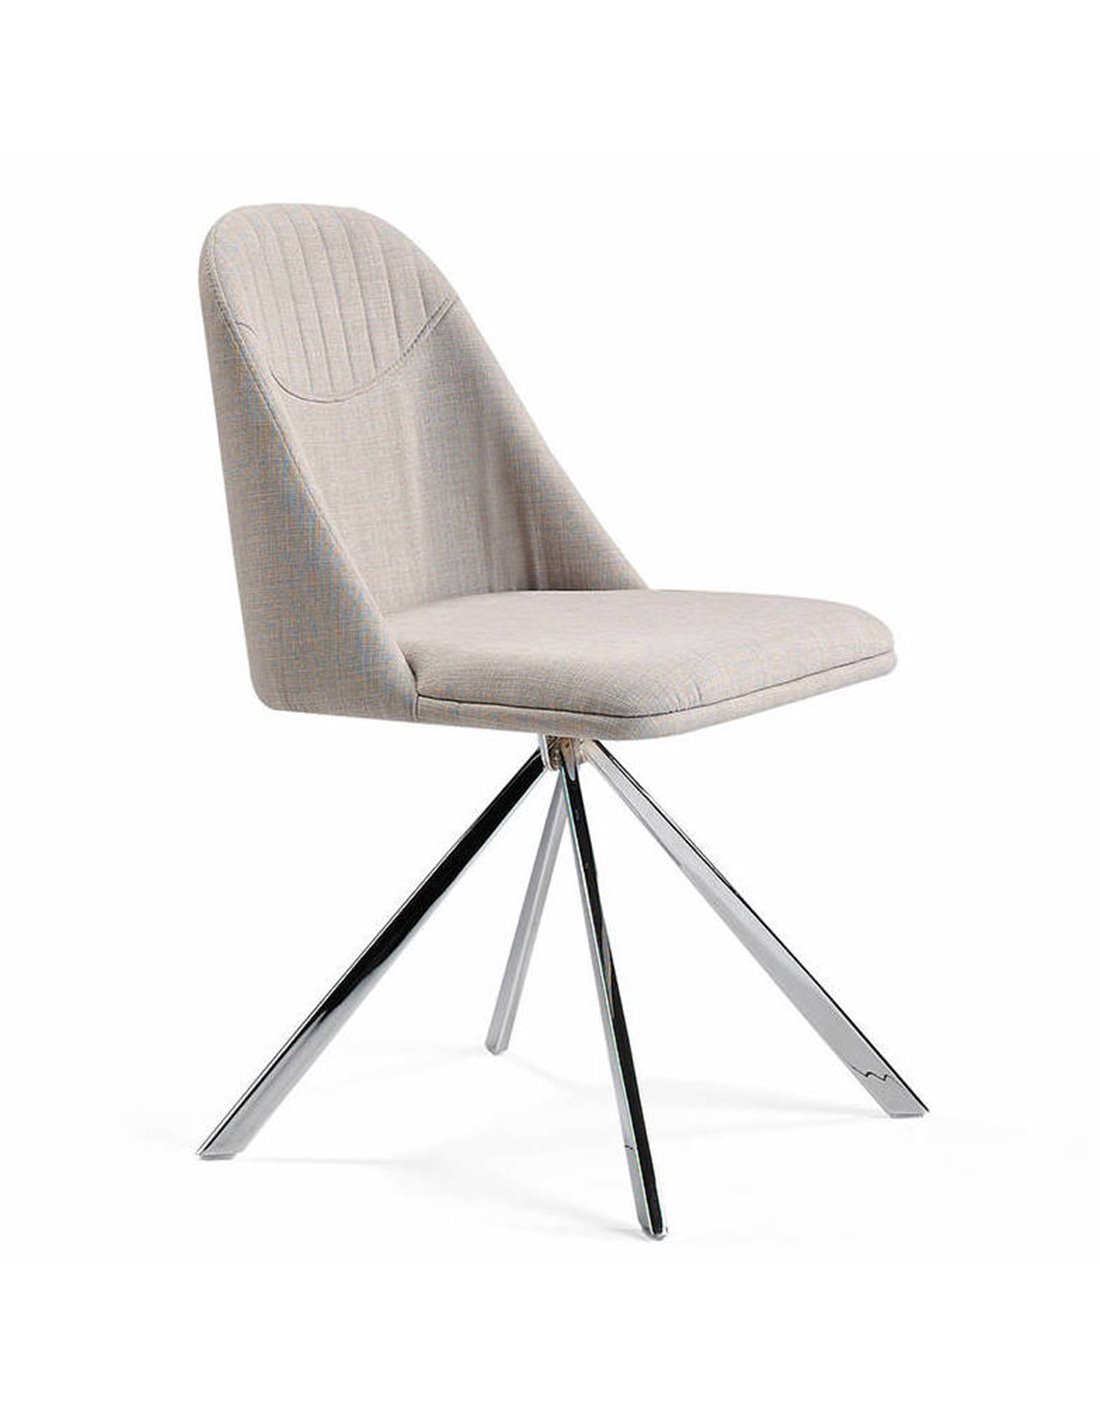 Поворотный стул espacio Malva f3216 /4020 серый